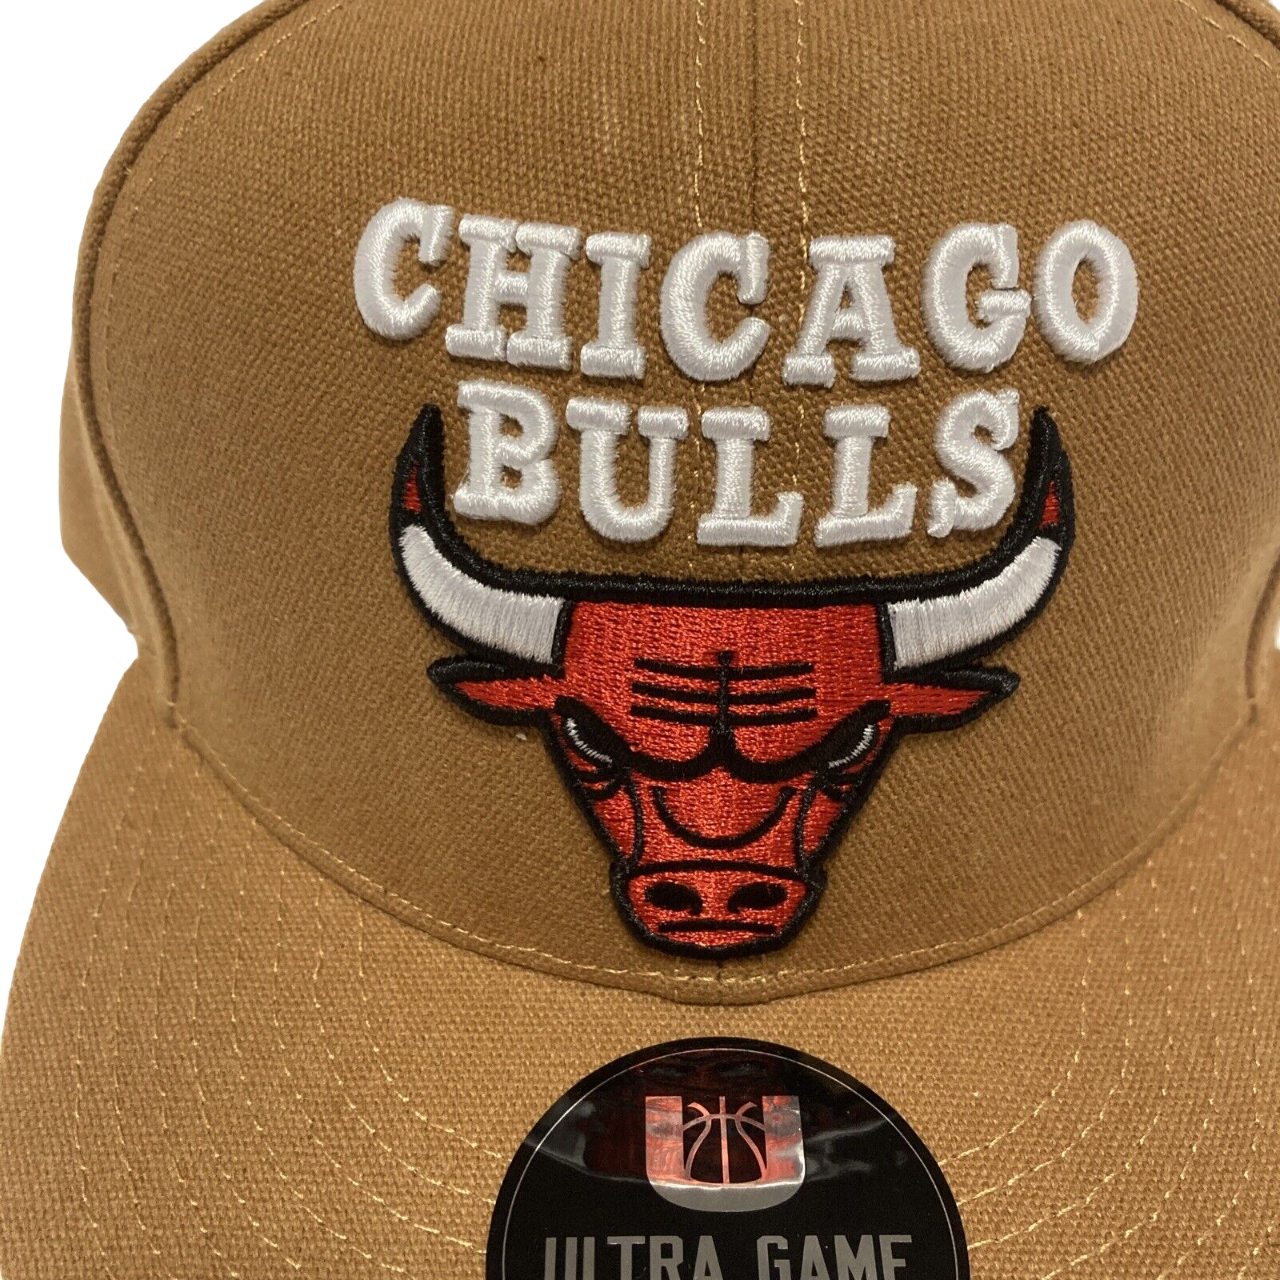 Chicago Bulls Ultra Game NBA Snapback VGMF300S